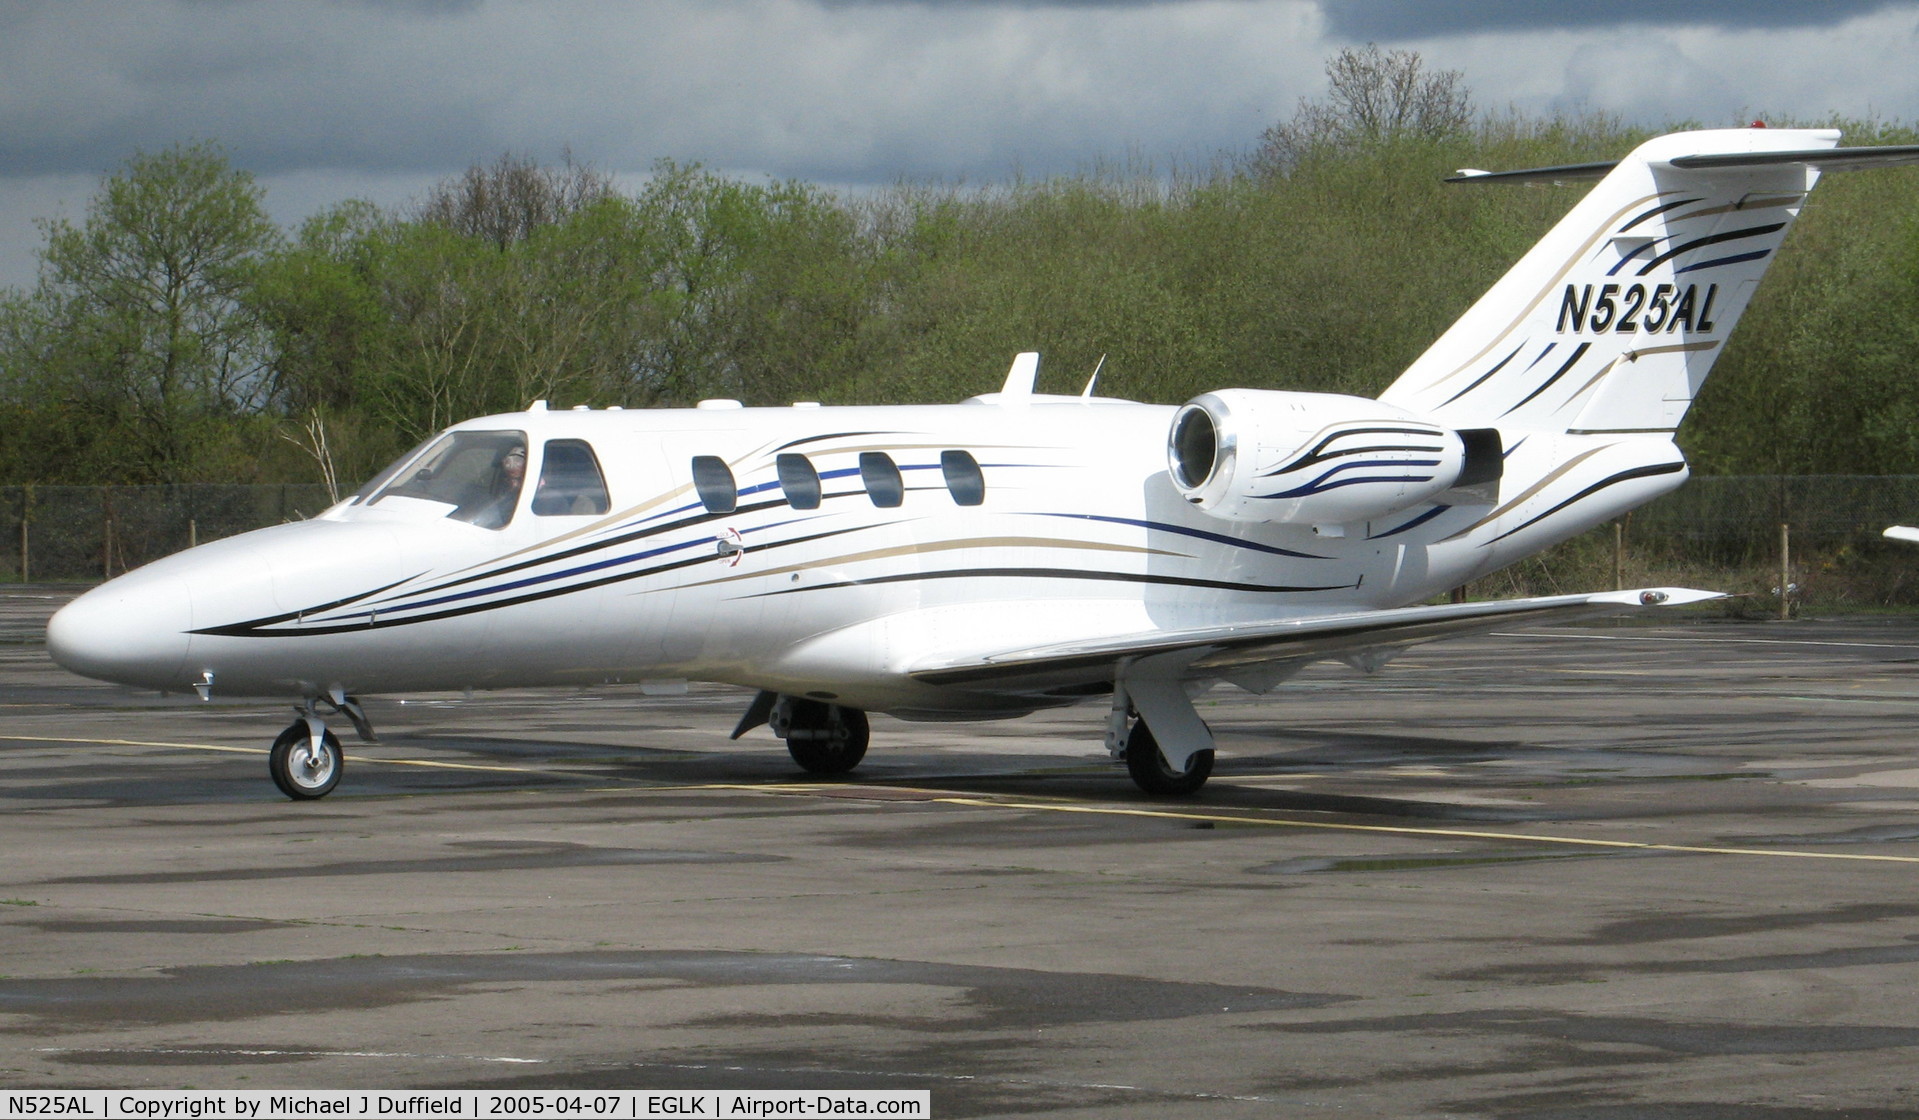 N525AL, 1993 Cessna 525 CitationJet C/N 525-0011, Citation Jet N525AL seen visiting Blackbushe on 7th April 2005